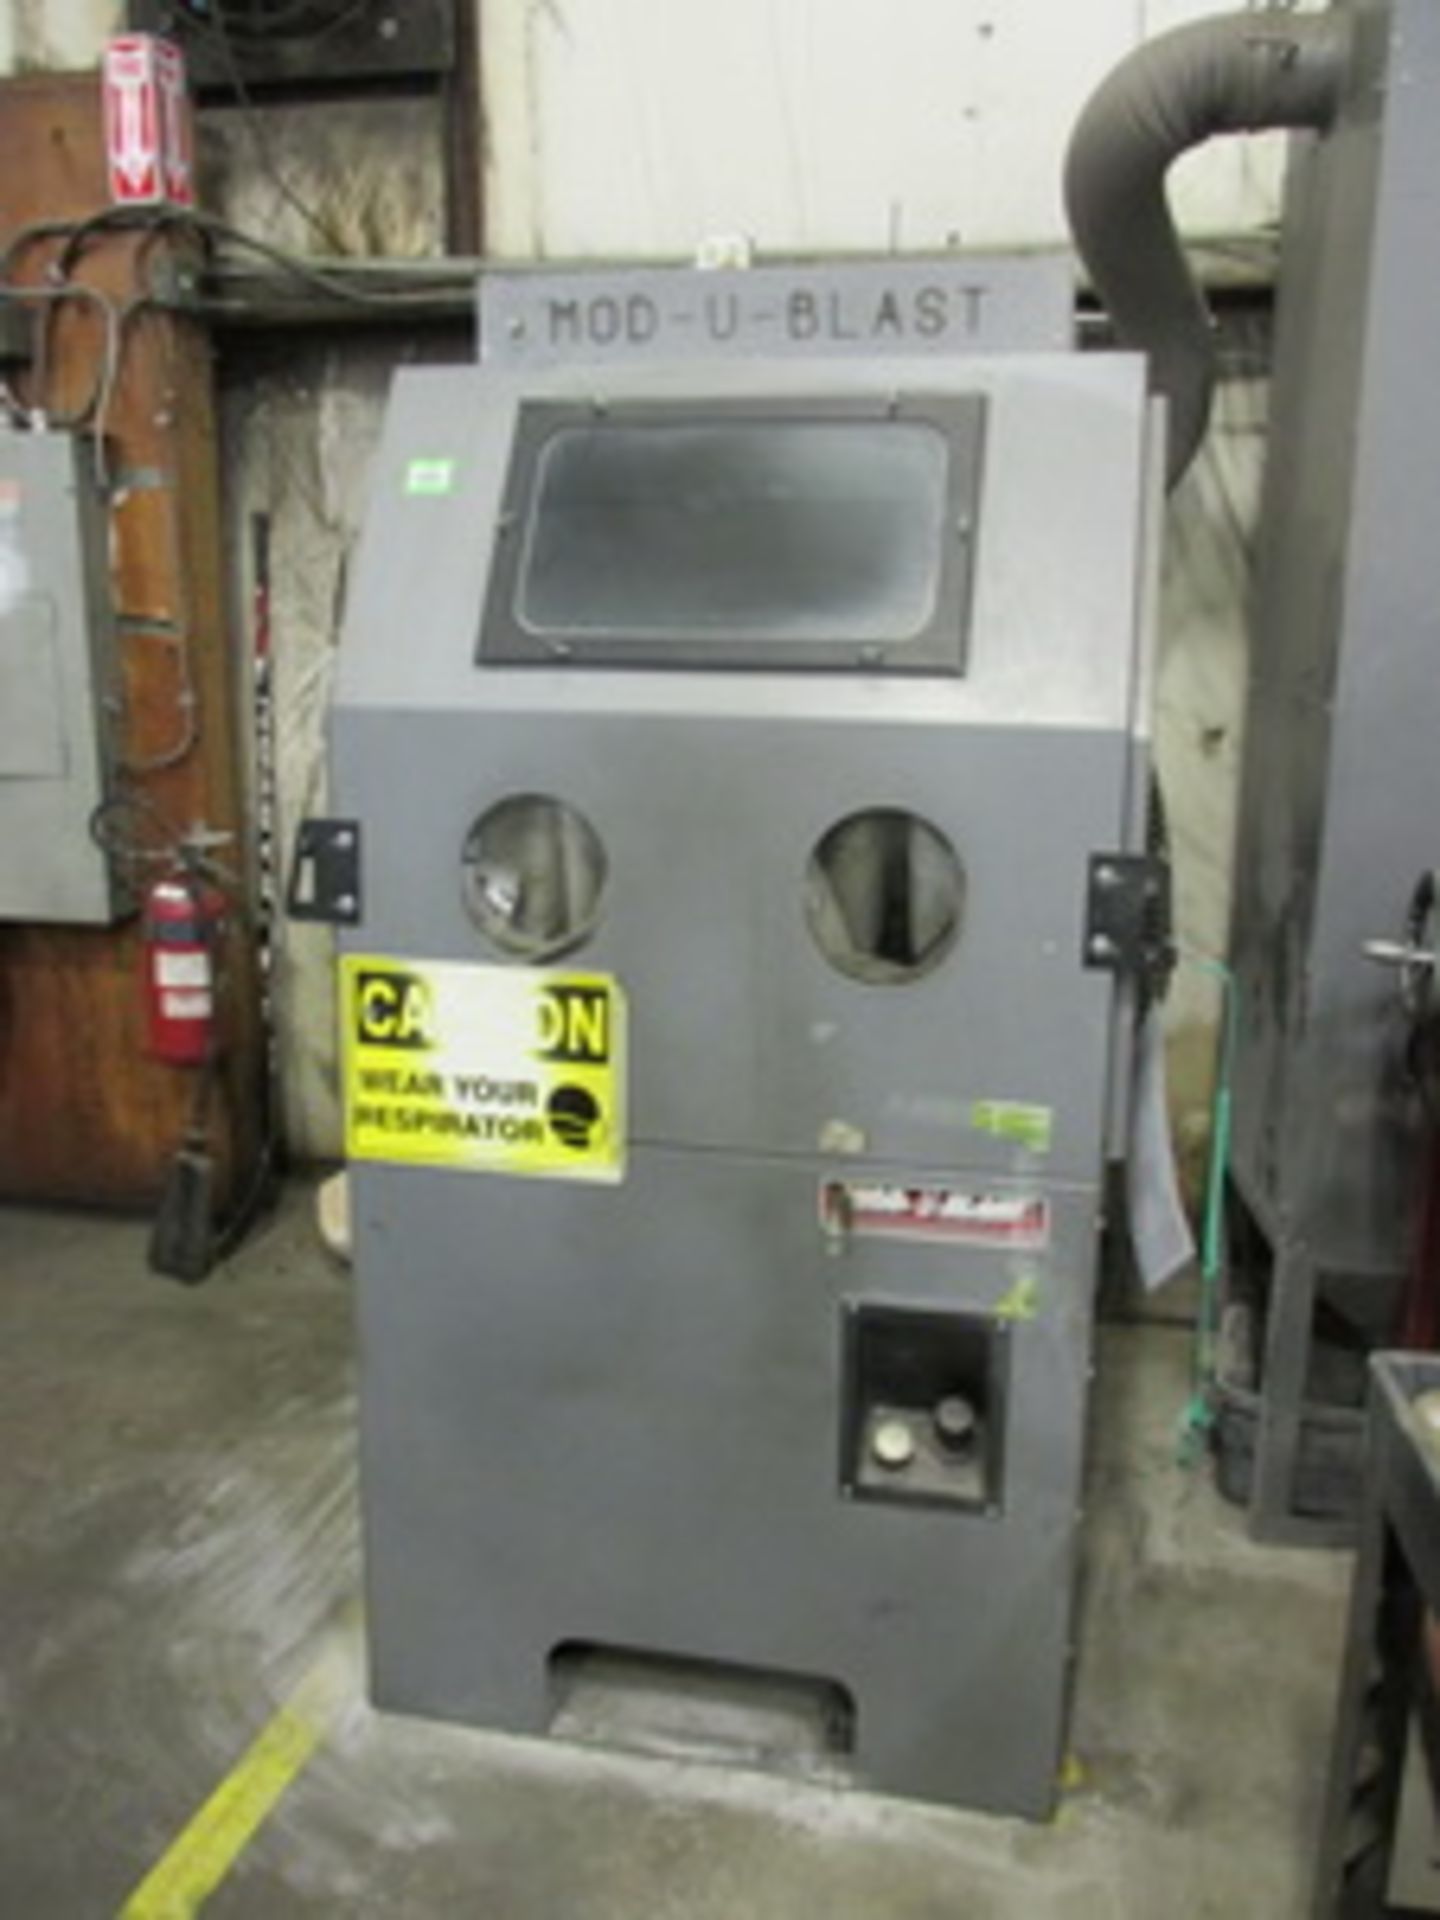 Mod-U-Blast Blast Cabinet - Image 2 of 2